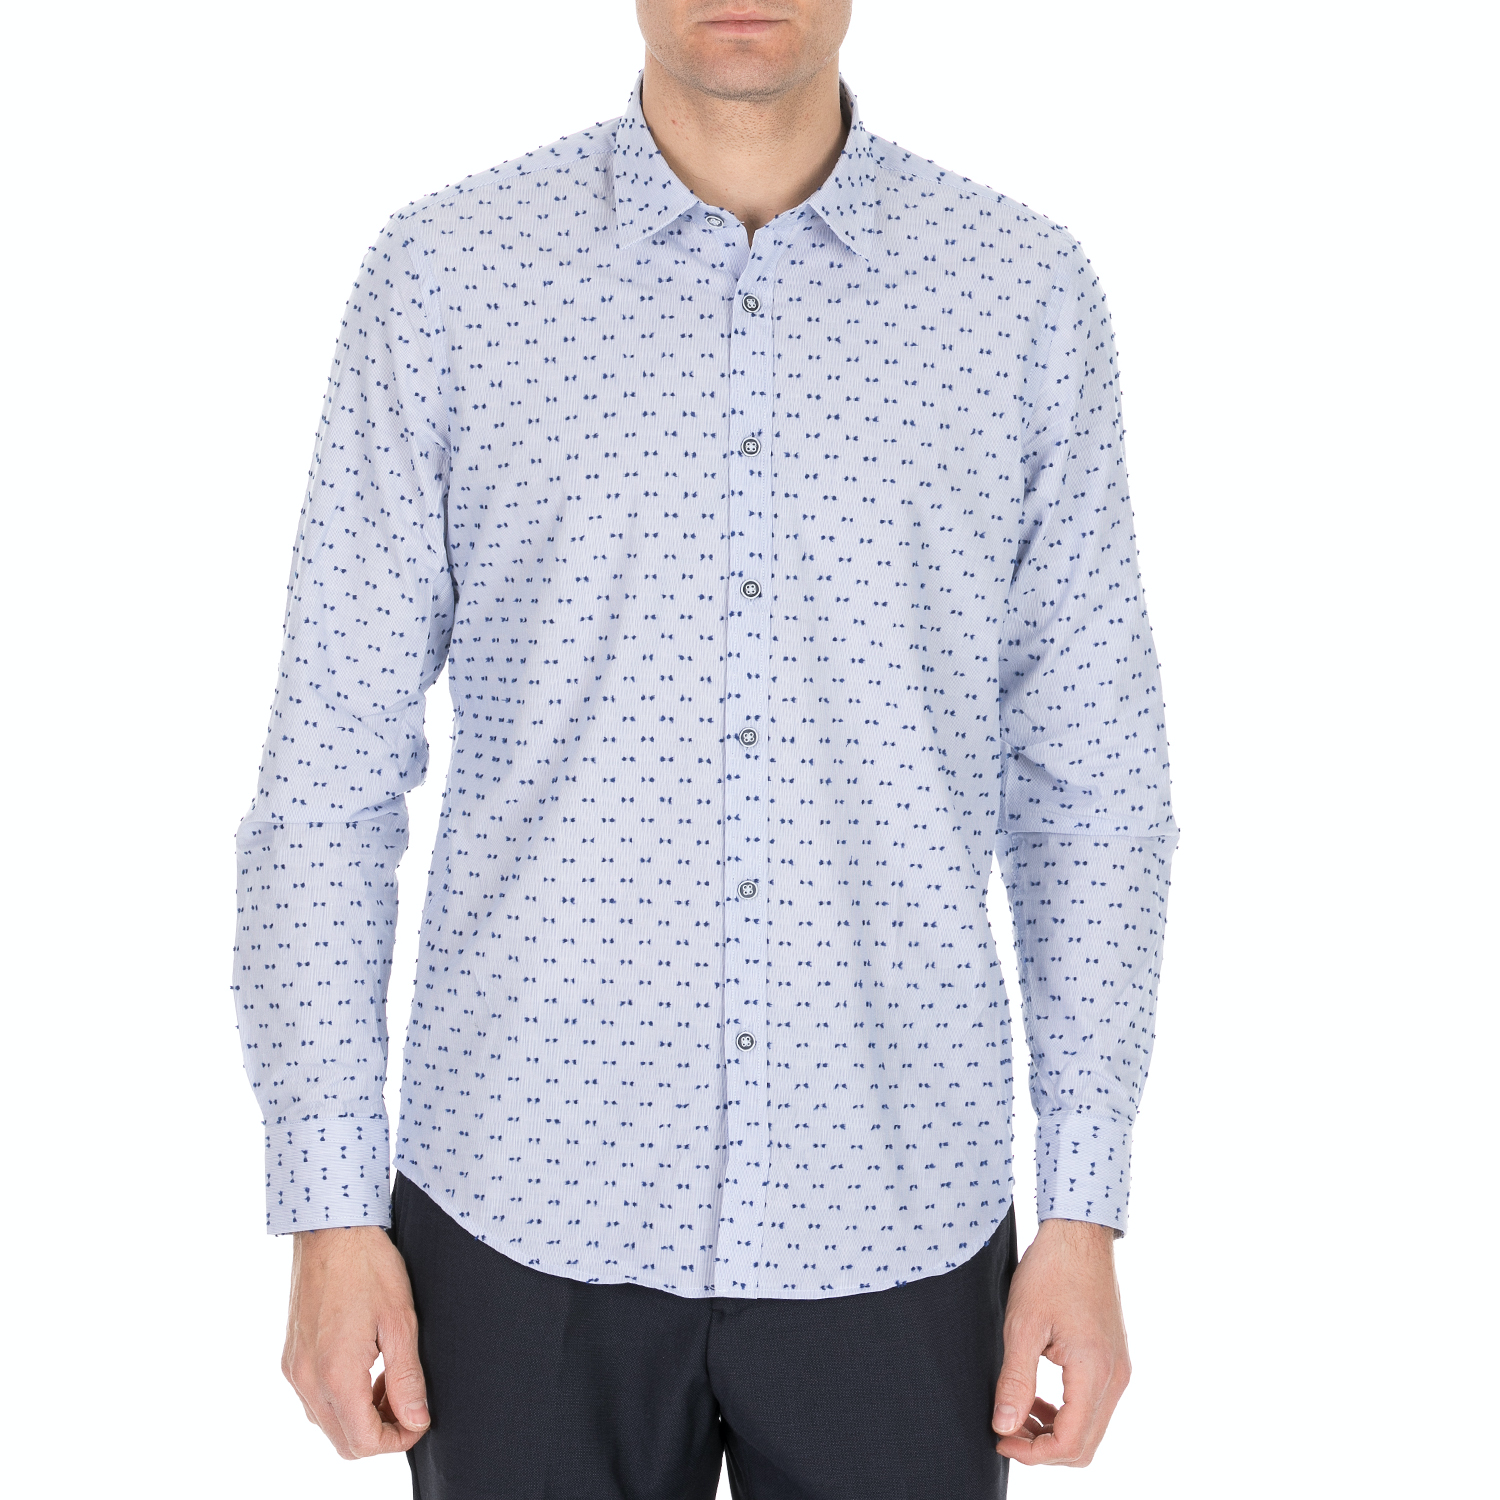 SSEINSE - Ανδρικό πουκάμισο SSEINSE γαλάζιο Ανδρικά/Ρούχα/Πουκάμισα/Μακρυμάνικα